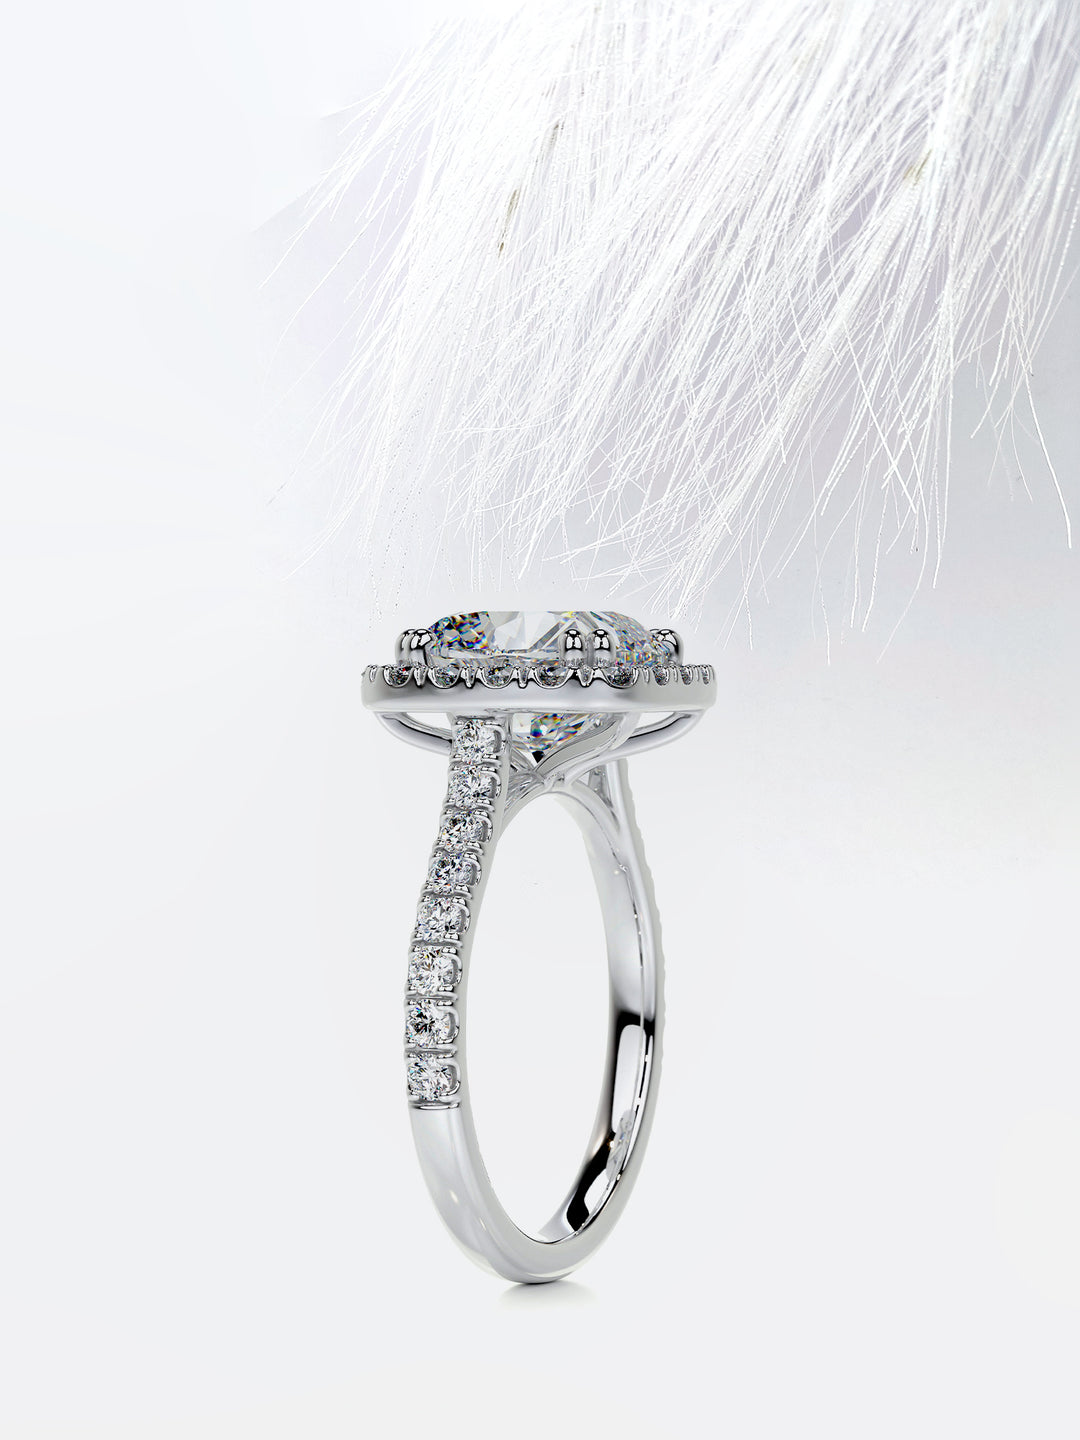 4.2CT Cushion Cut Moissanite Halo Diamond Engagement Ring